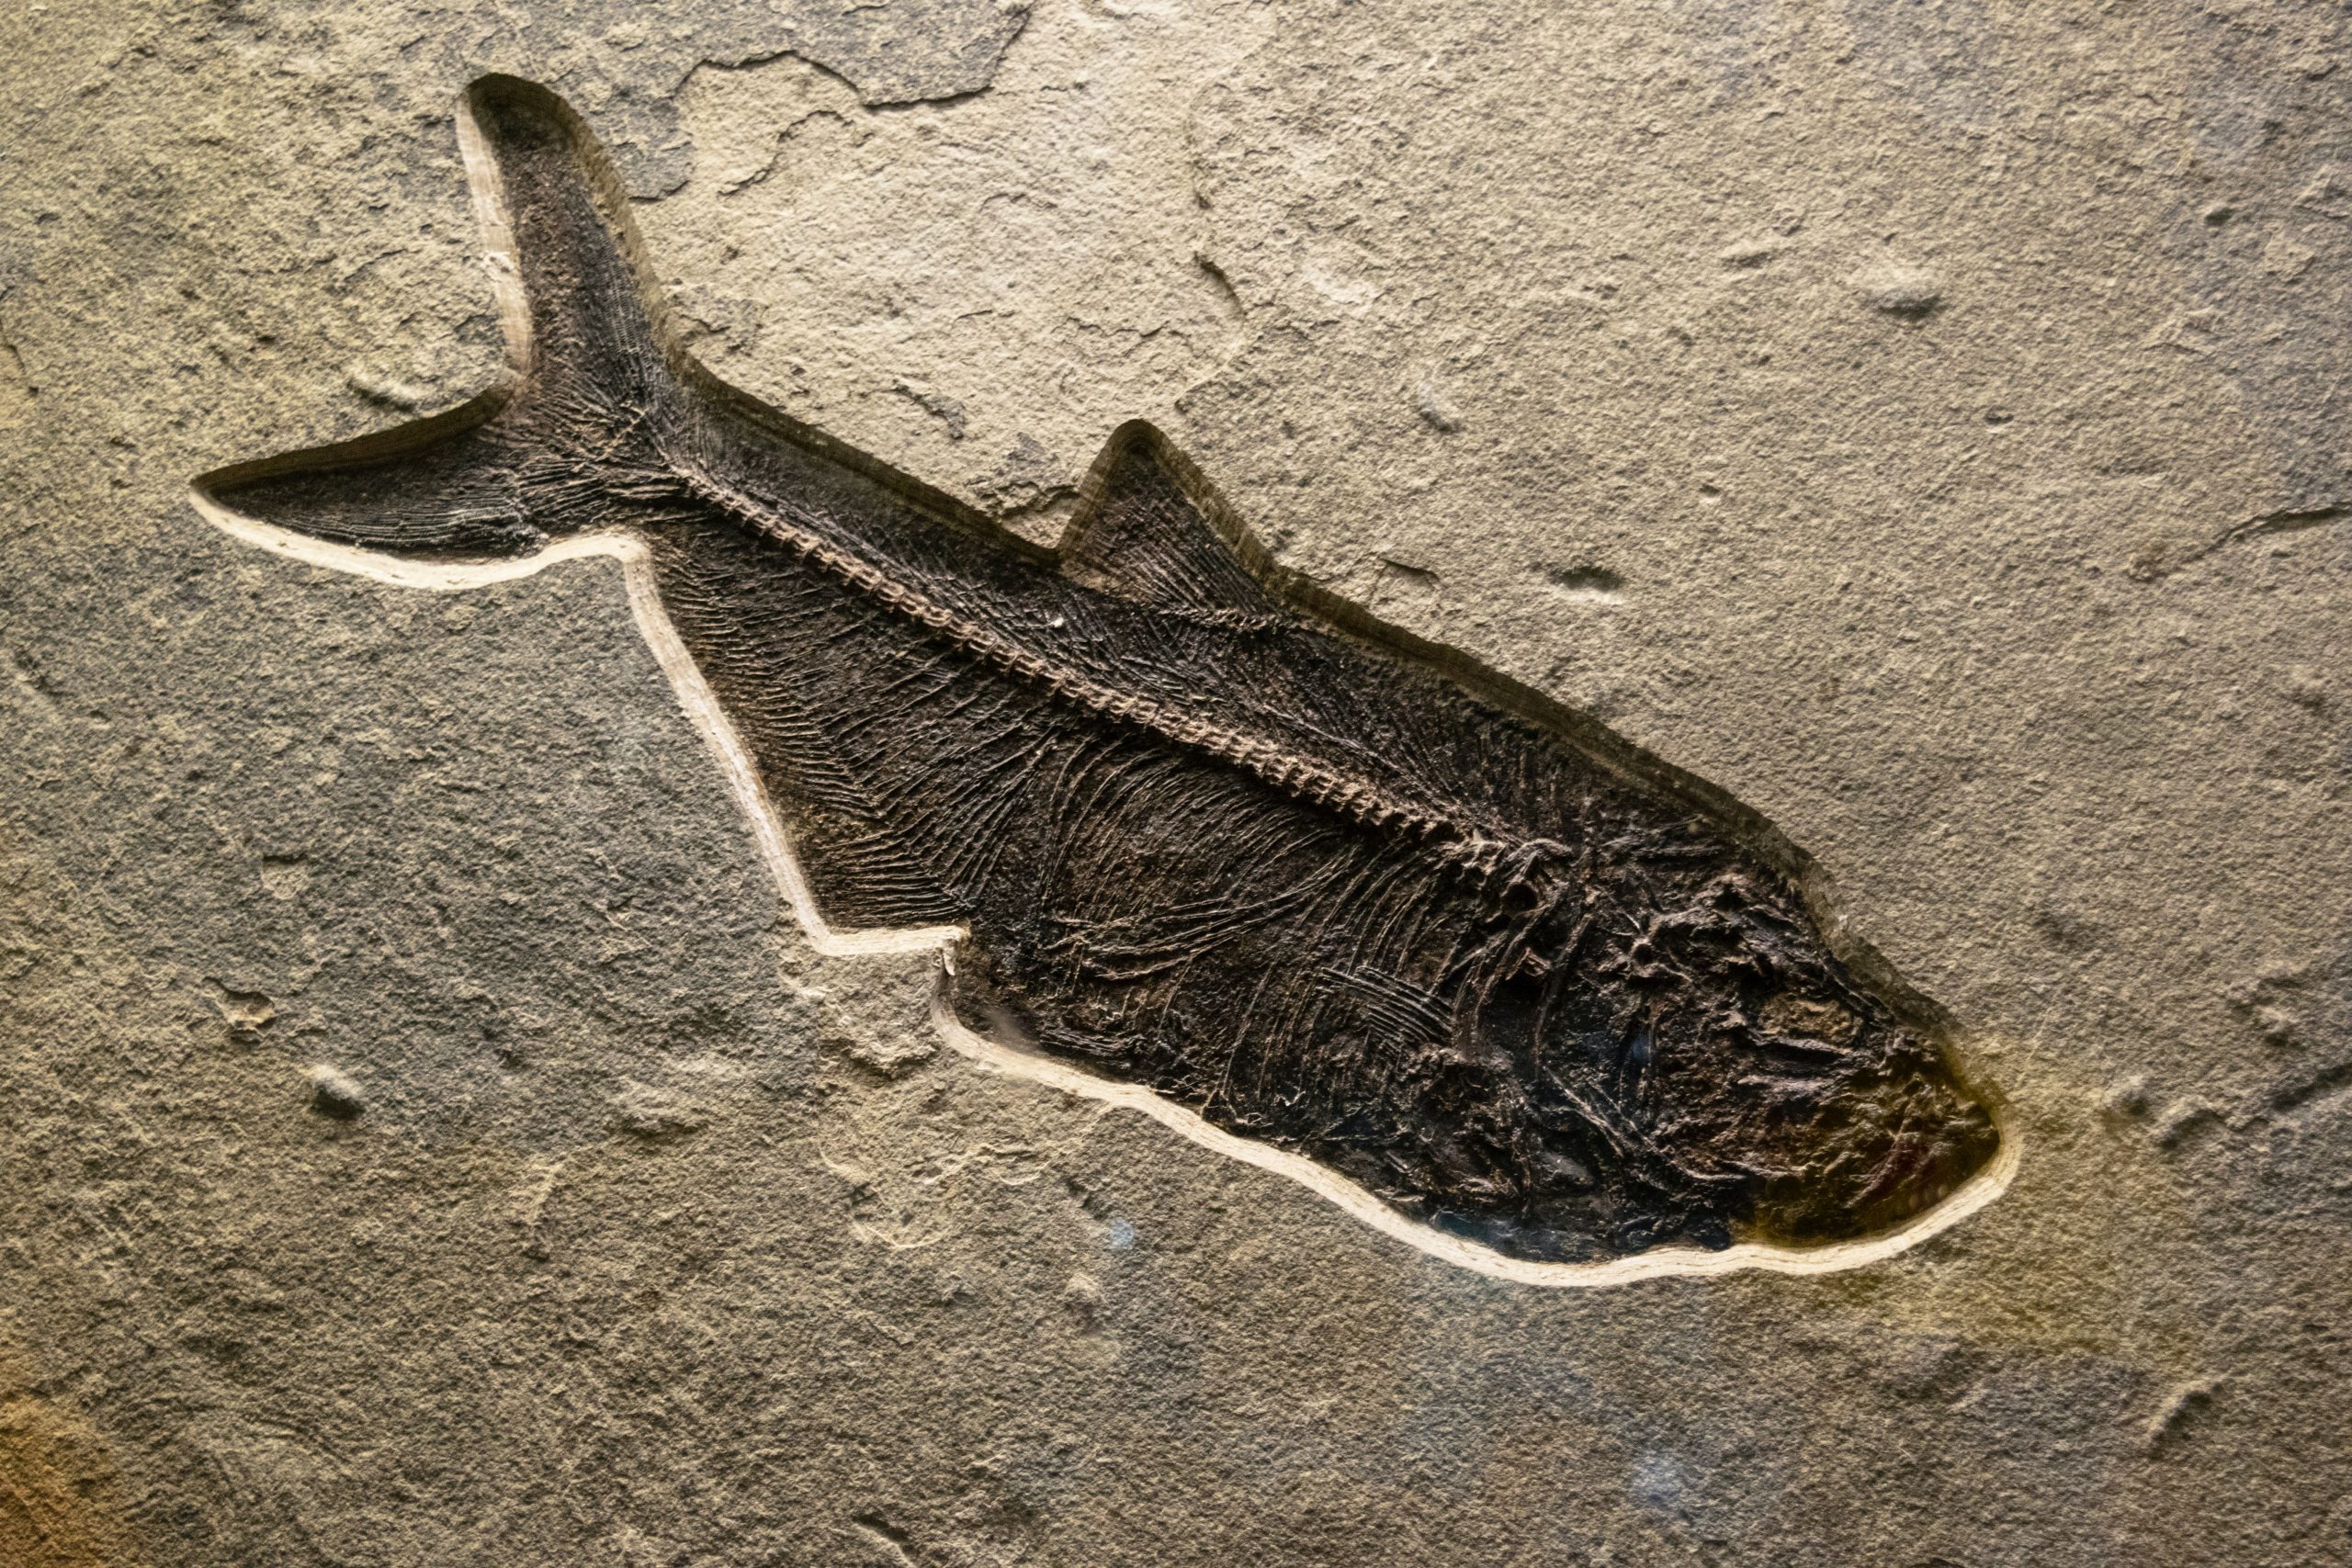 Fosil ikan era Oligosen ditemukan di Dataran Tinggi Qinghai Tibet